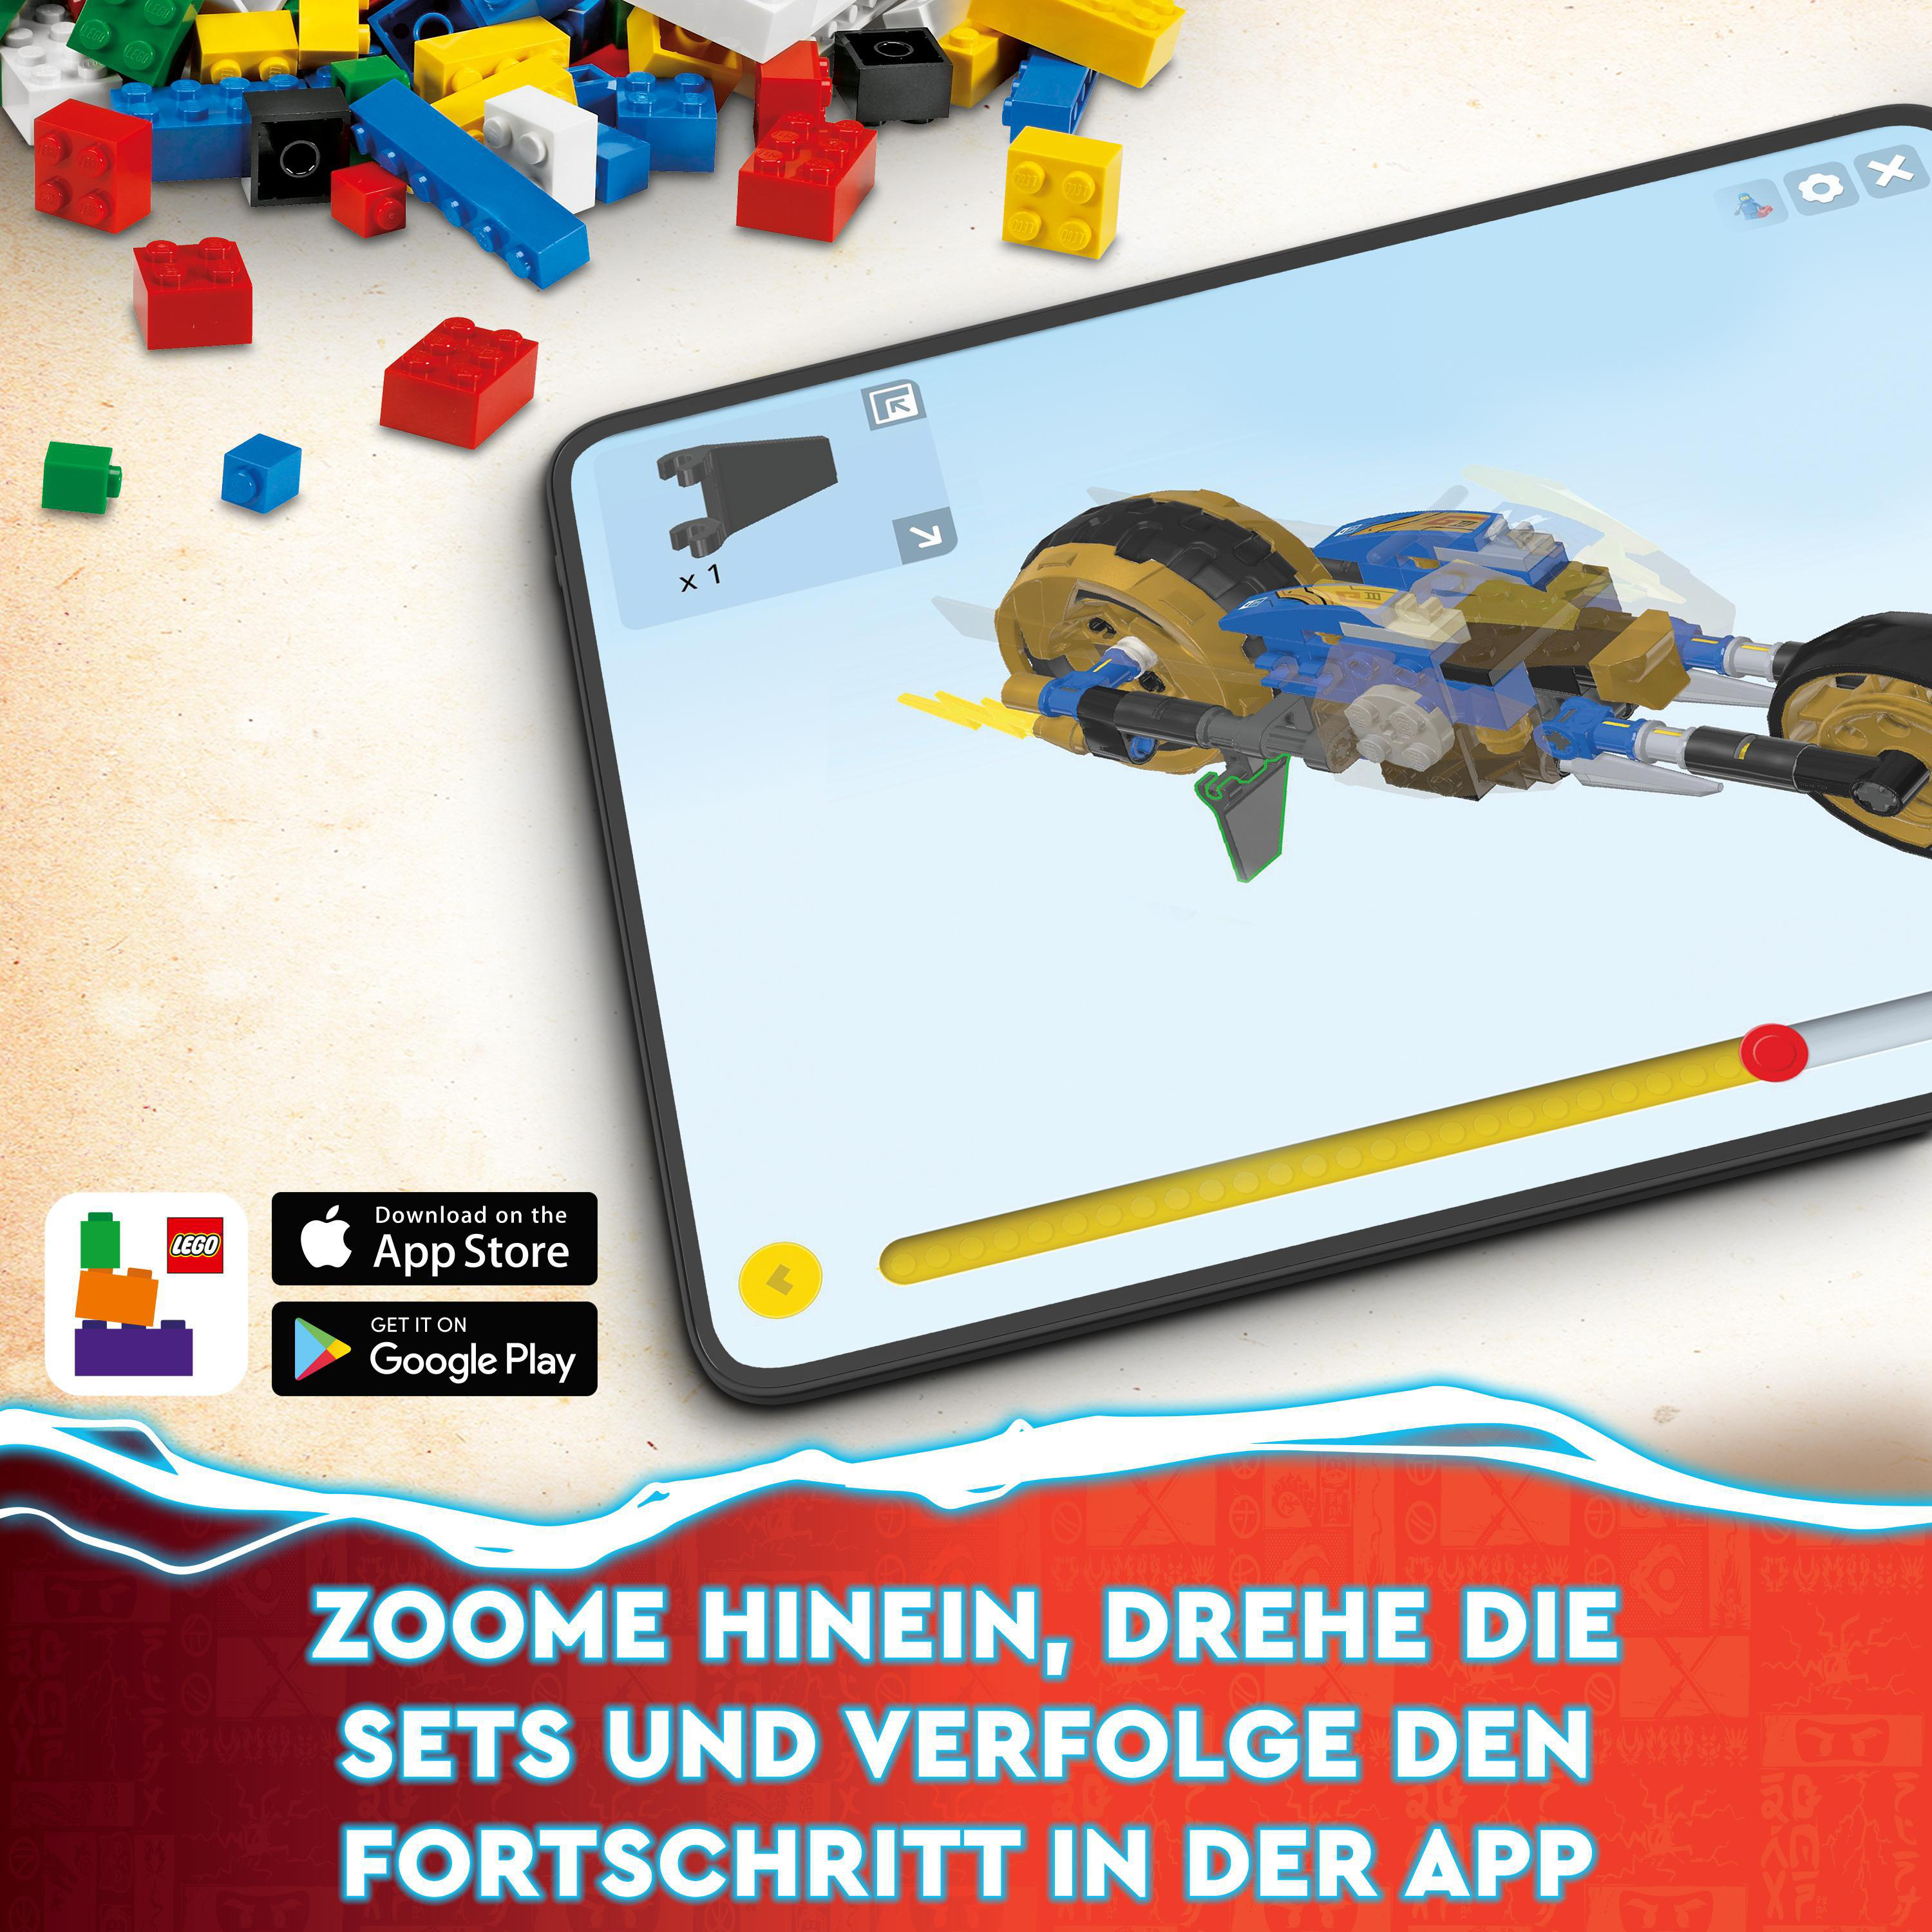 LEGO NINJAGO 71791 Zanes Mehrfarbig Bausatz, Drachenpower-Spinjitzu-Rennwagen